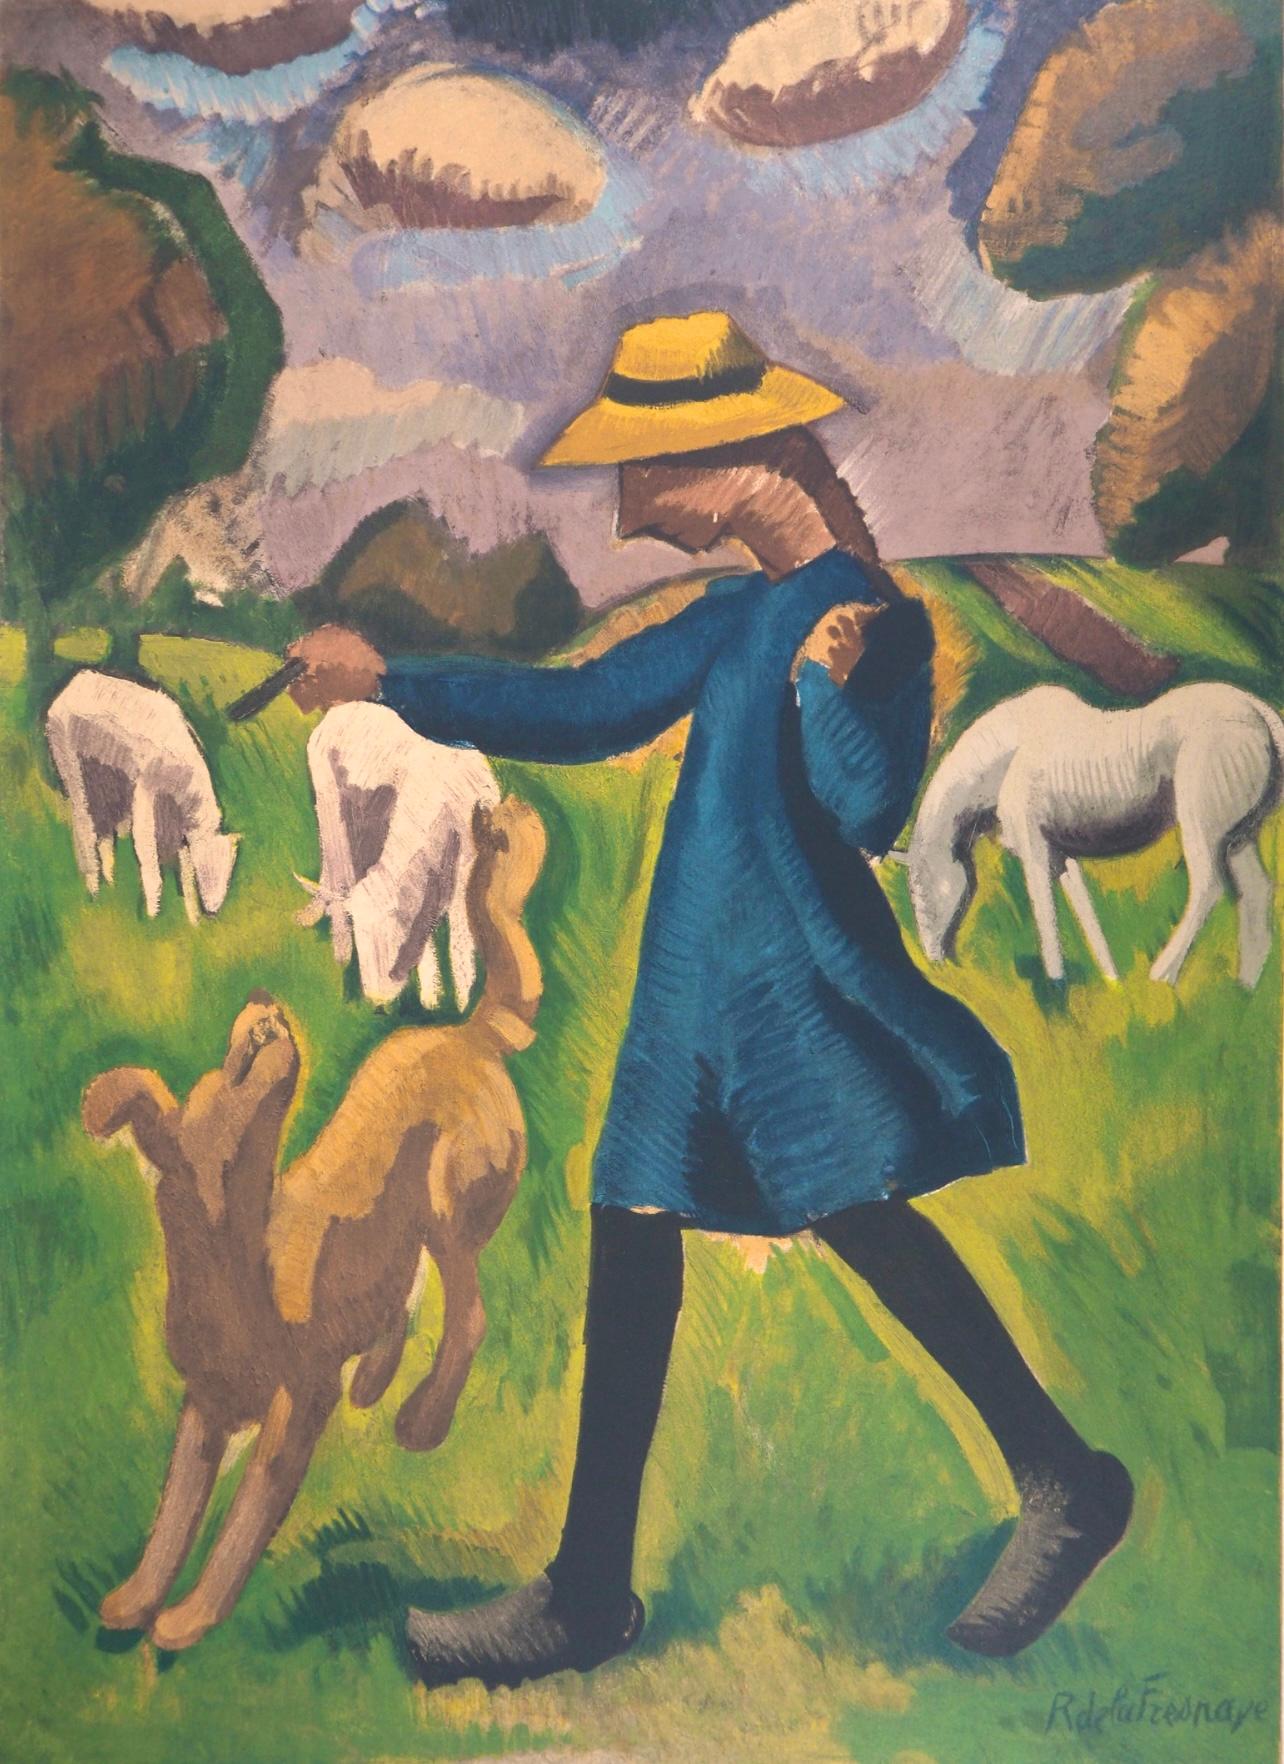 Roger de la Fresnaye Figurative Print - de La Fresnaye, Gardeuse de moutons, Roger de La Fresnaye (after)